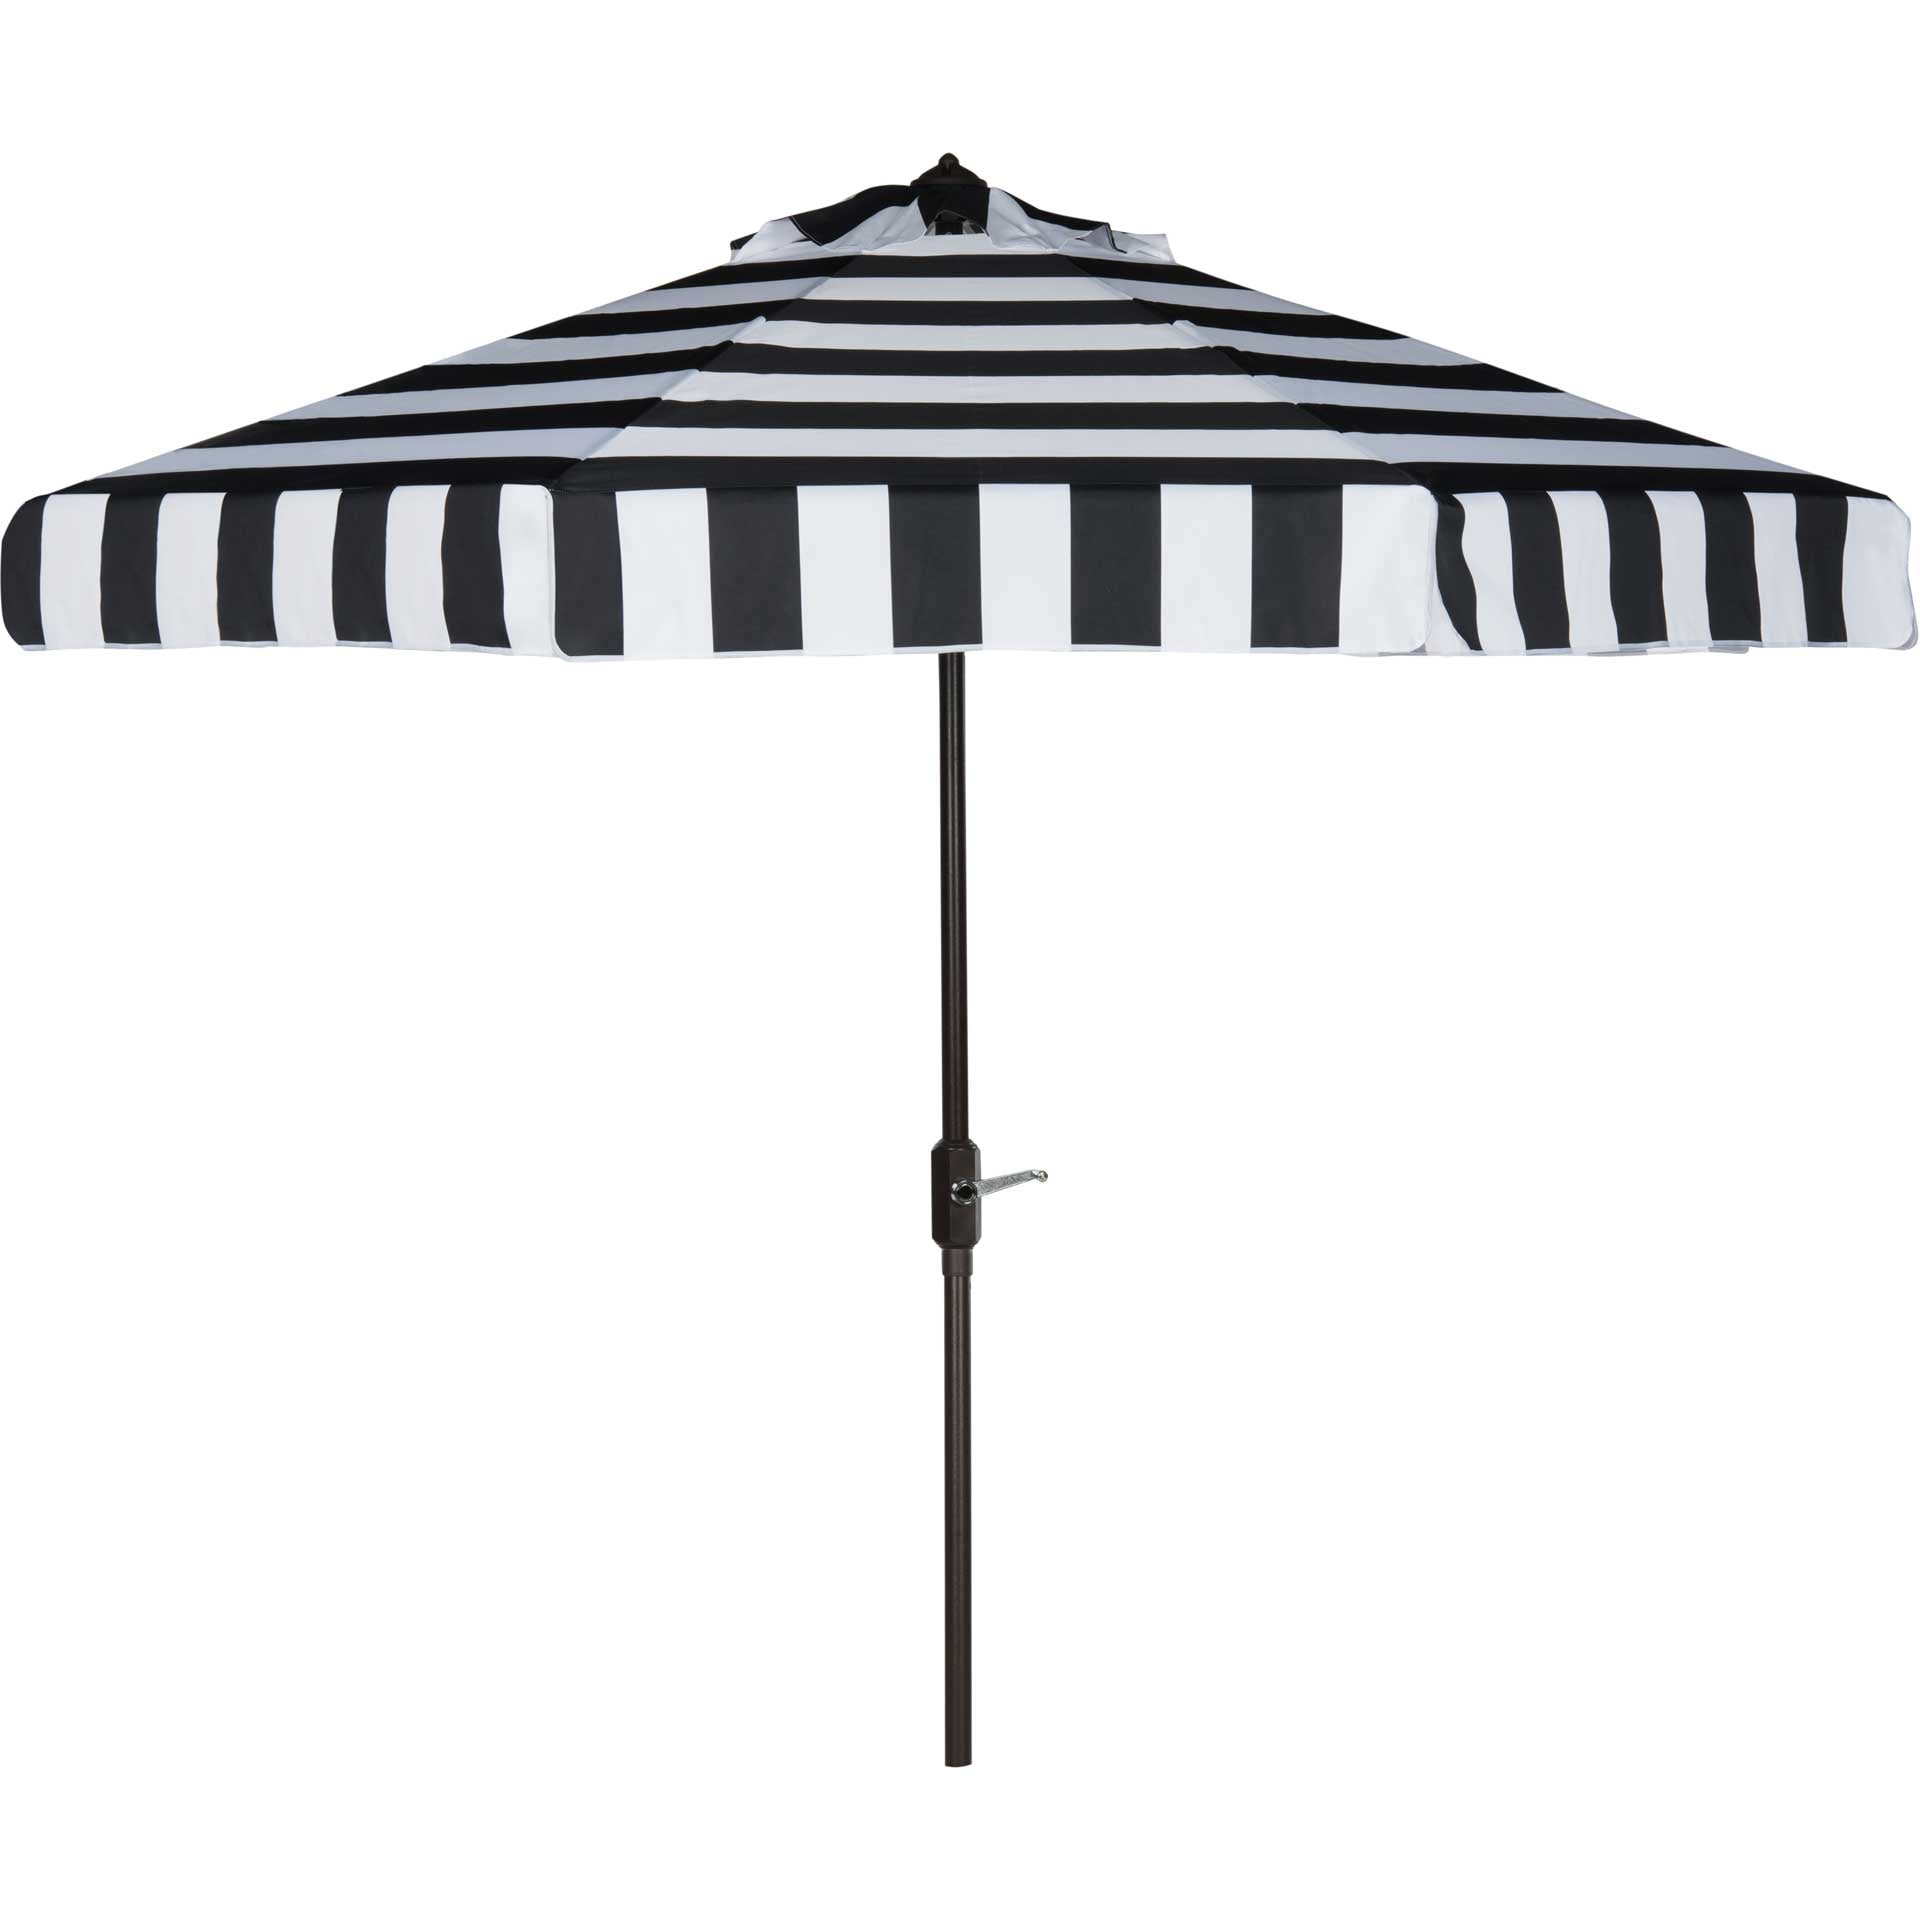 Elita Uv Resistant Auto Tilt Umbrella Black/White